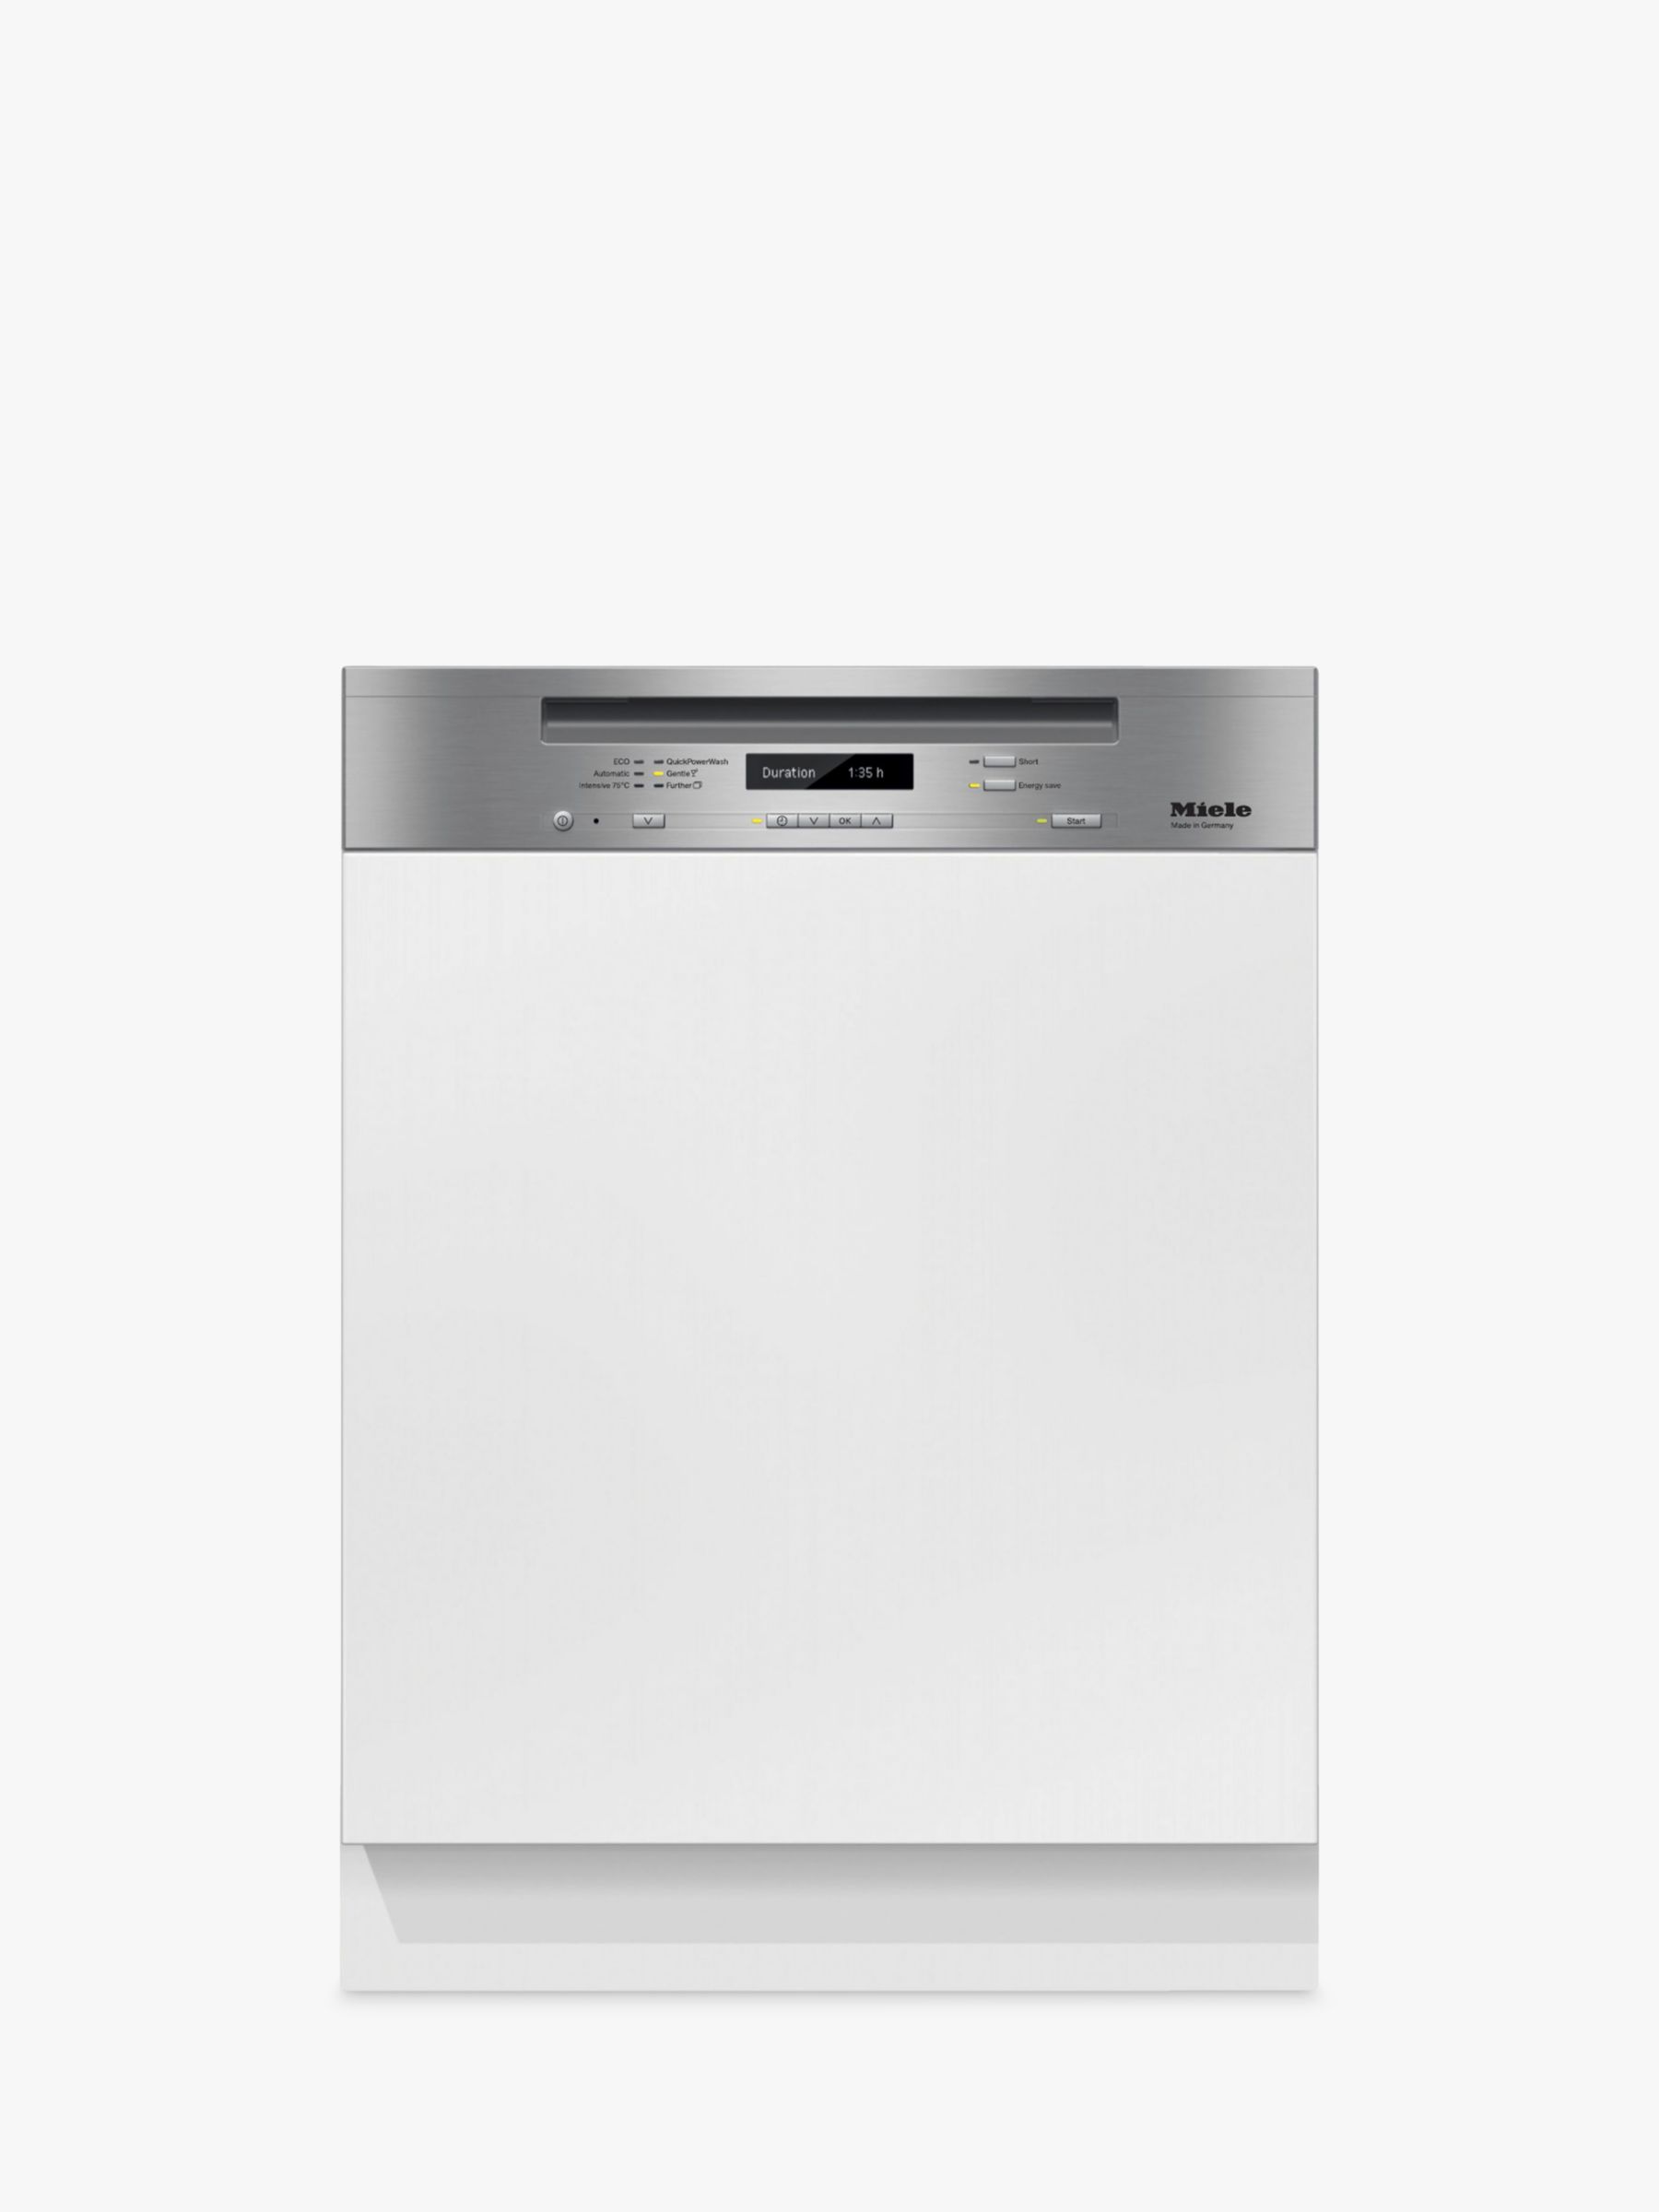 Miele G6620 SCi Semi-Integrated Dishwasher, Clean Steel